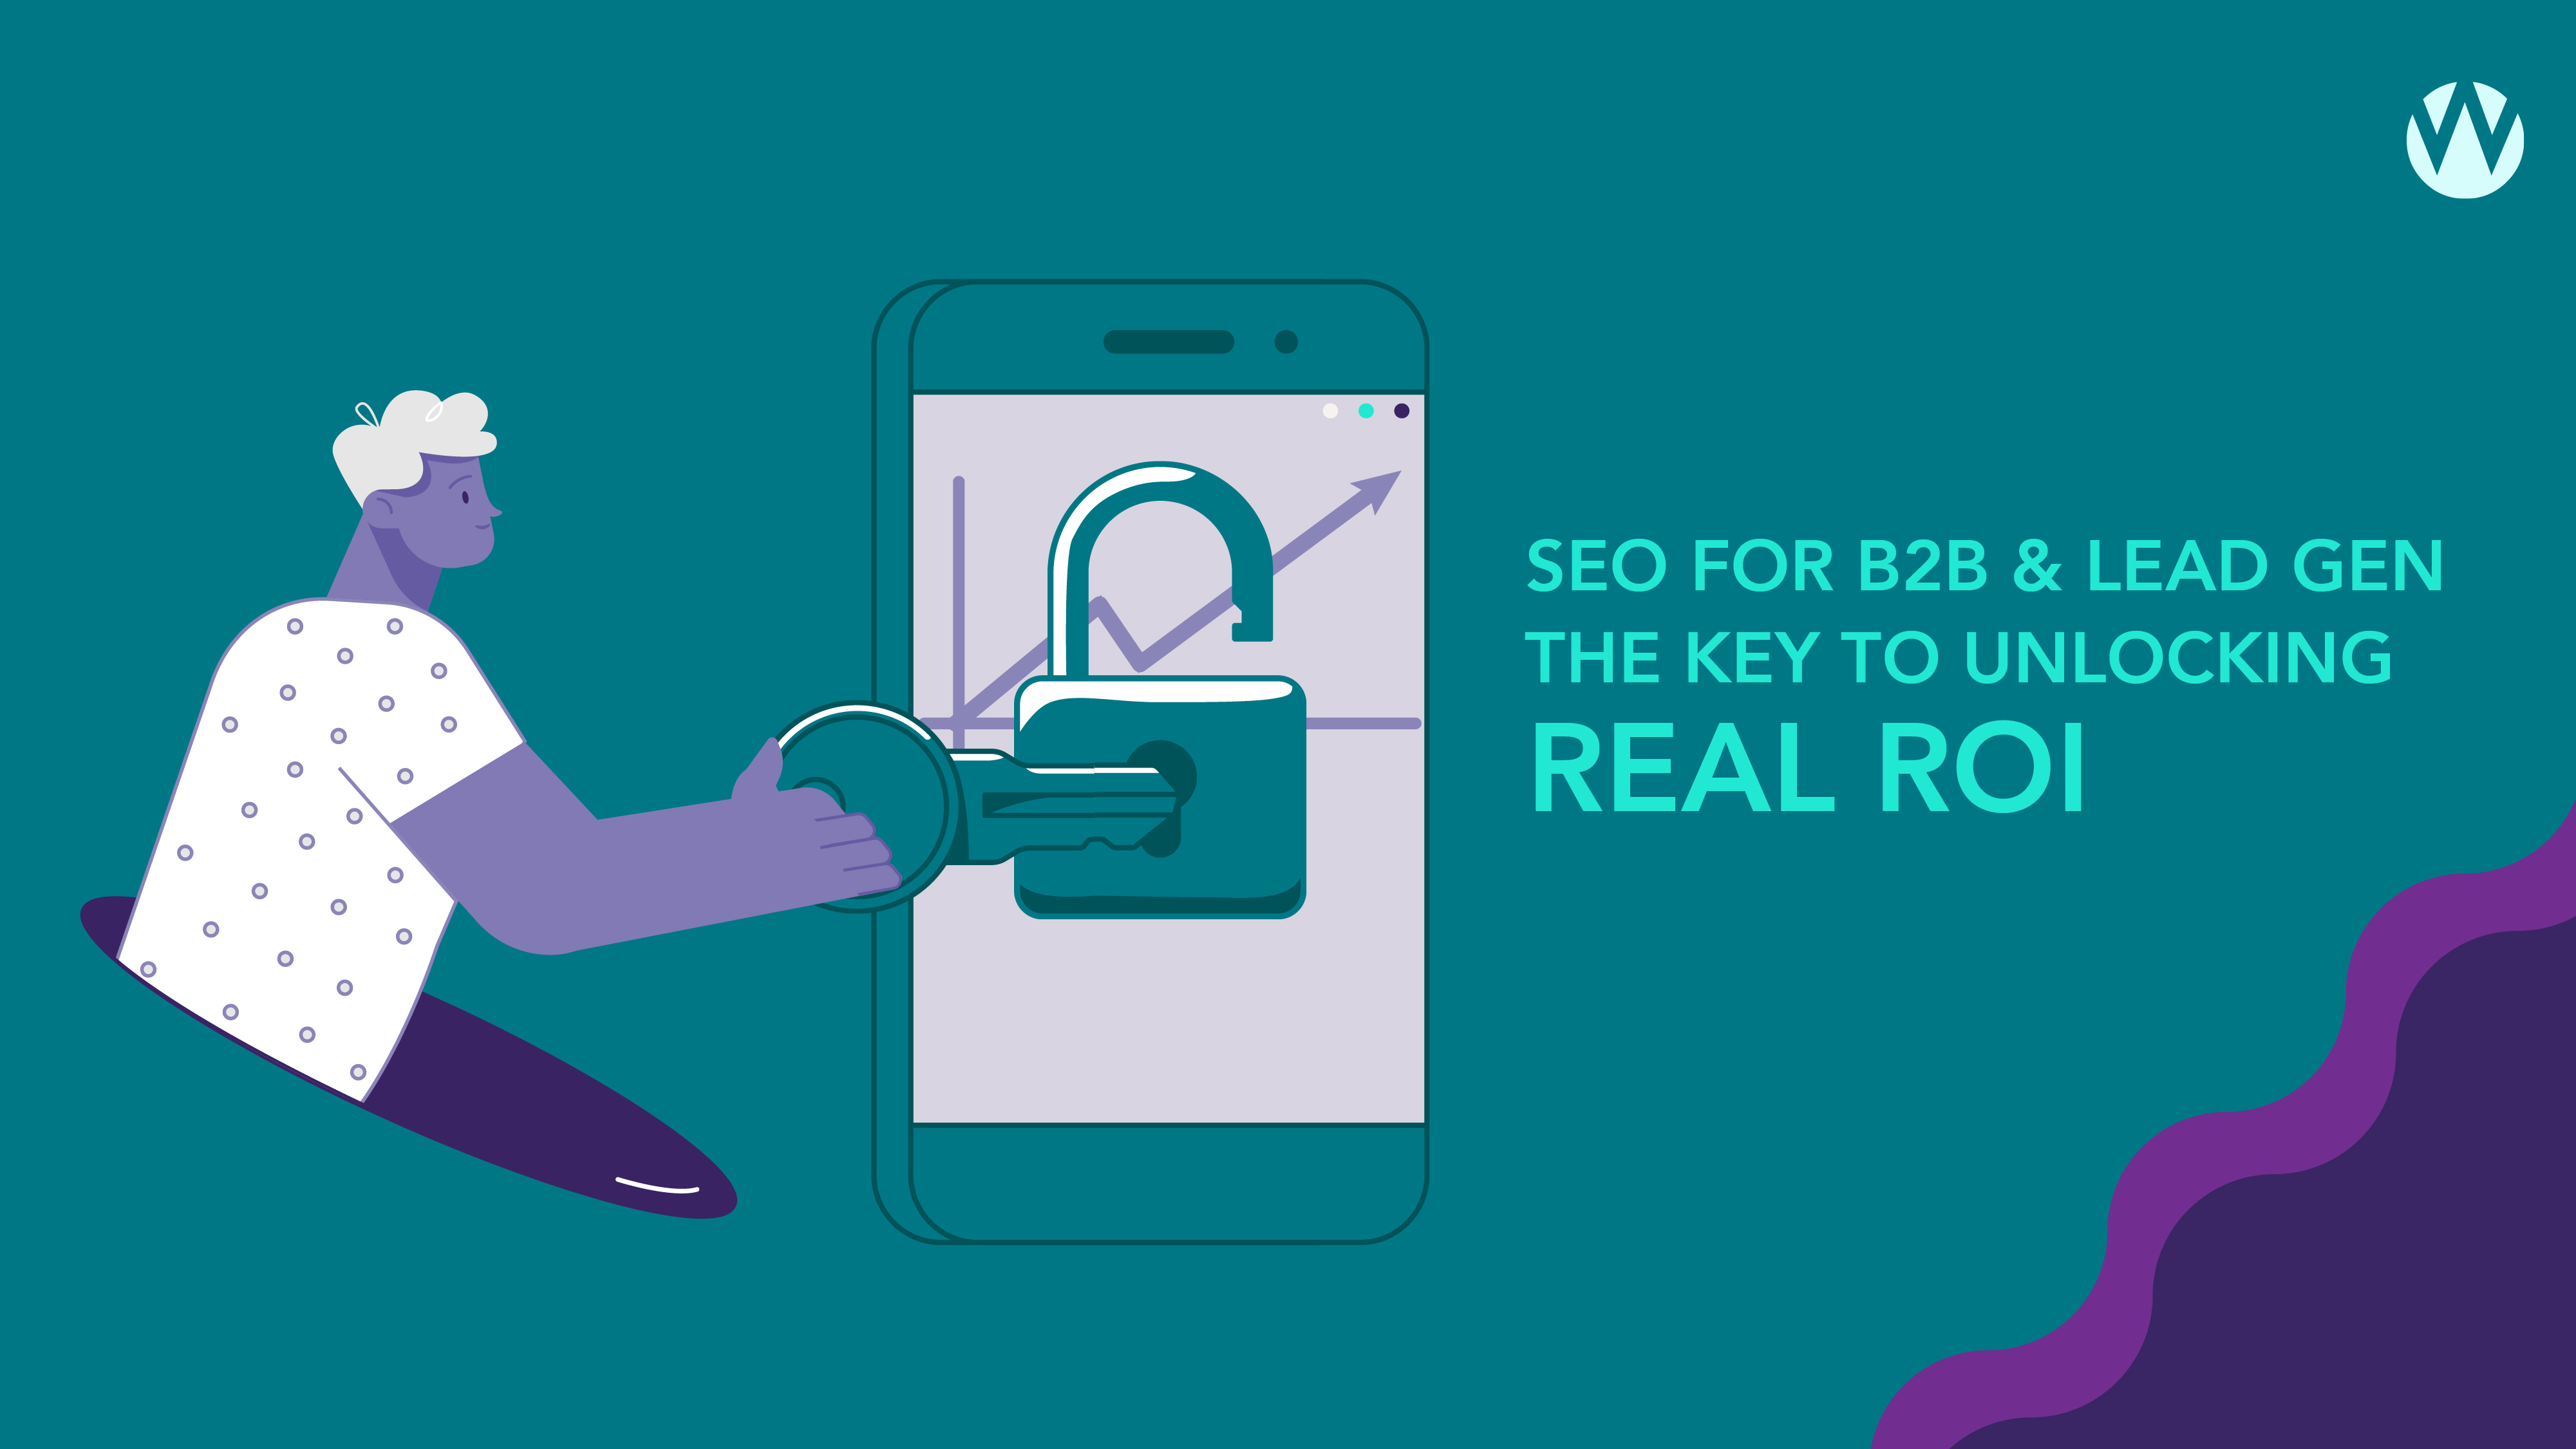 SEO for B2B & Lead Gen: The Key to Unlocking Real ROI